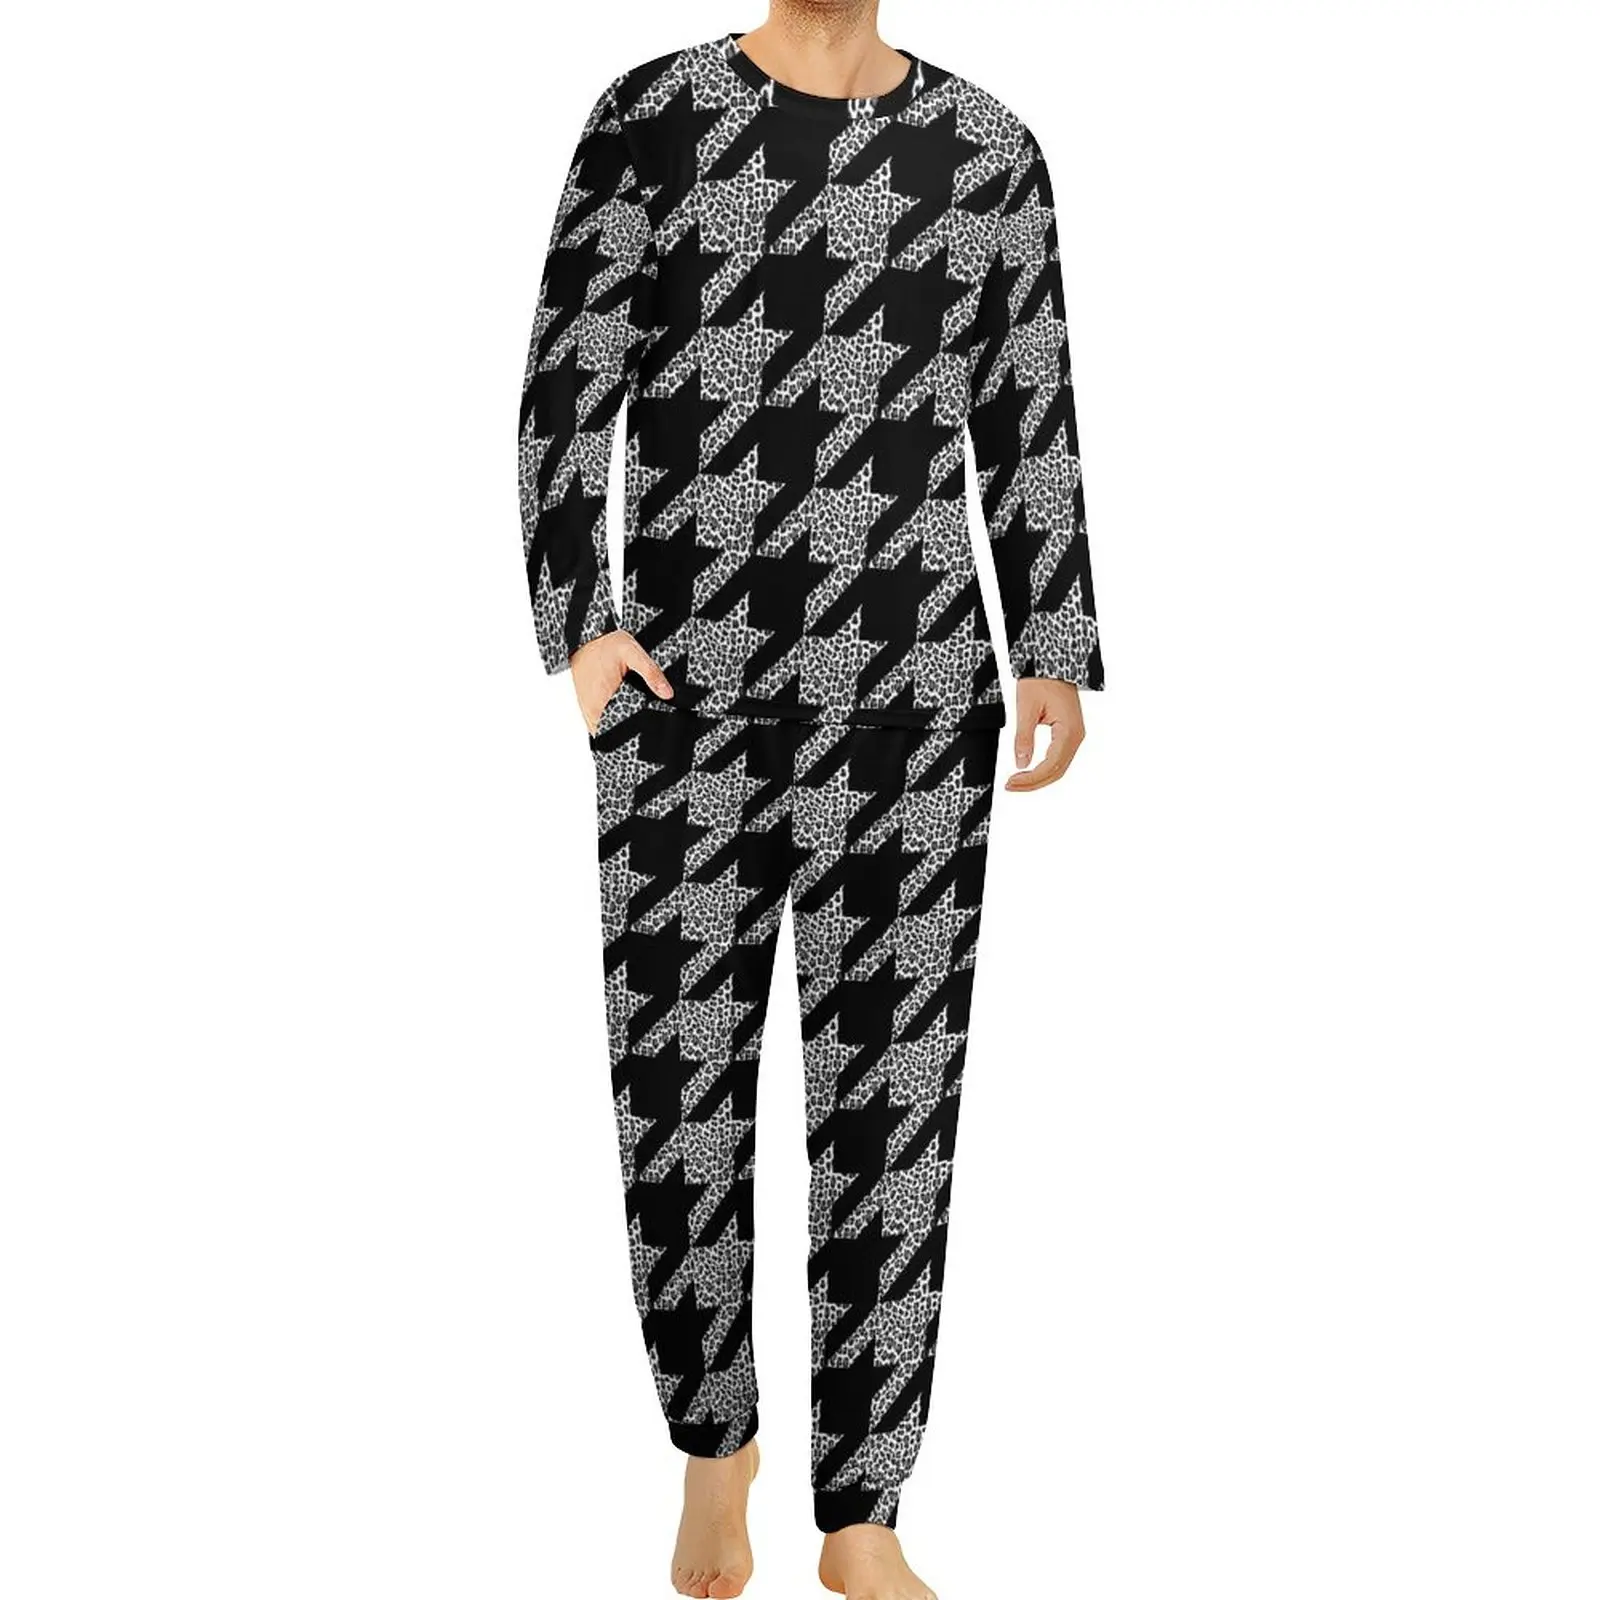 

Black Houndstooth Pajamas Cheetah Print Male Long Sleeve Kawaii Pajama Sets 2 Pieces Home Autumn Custom Nightwear Gift